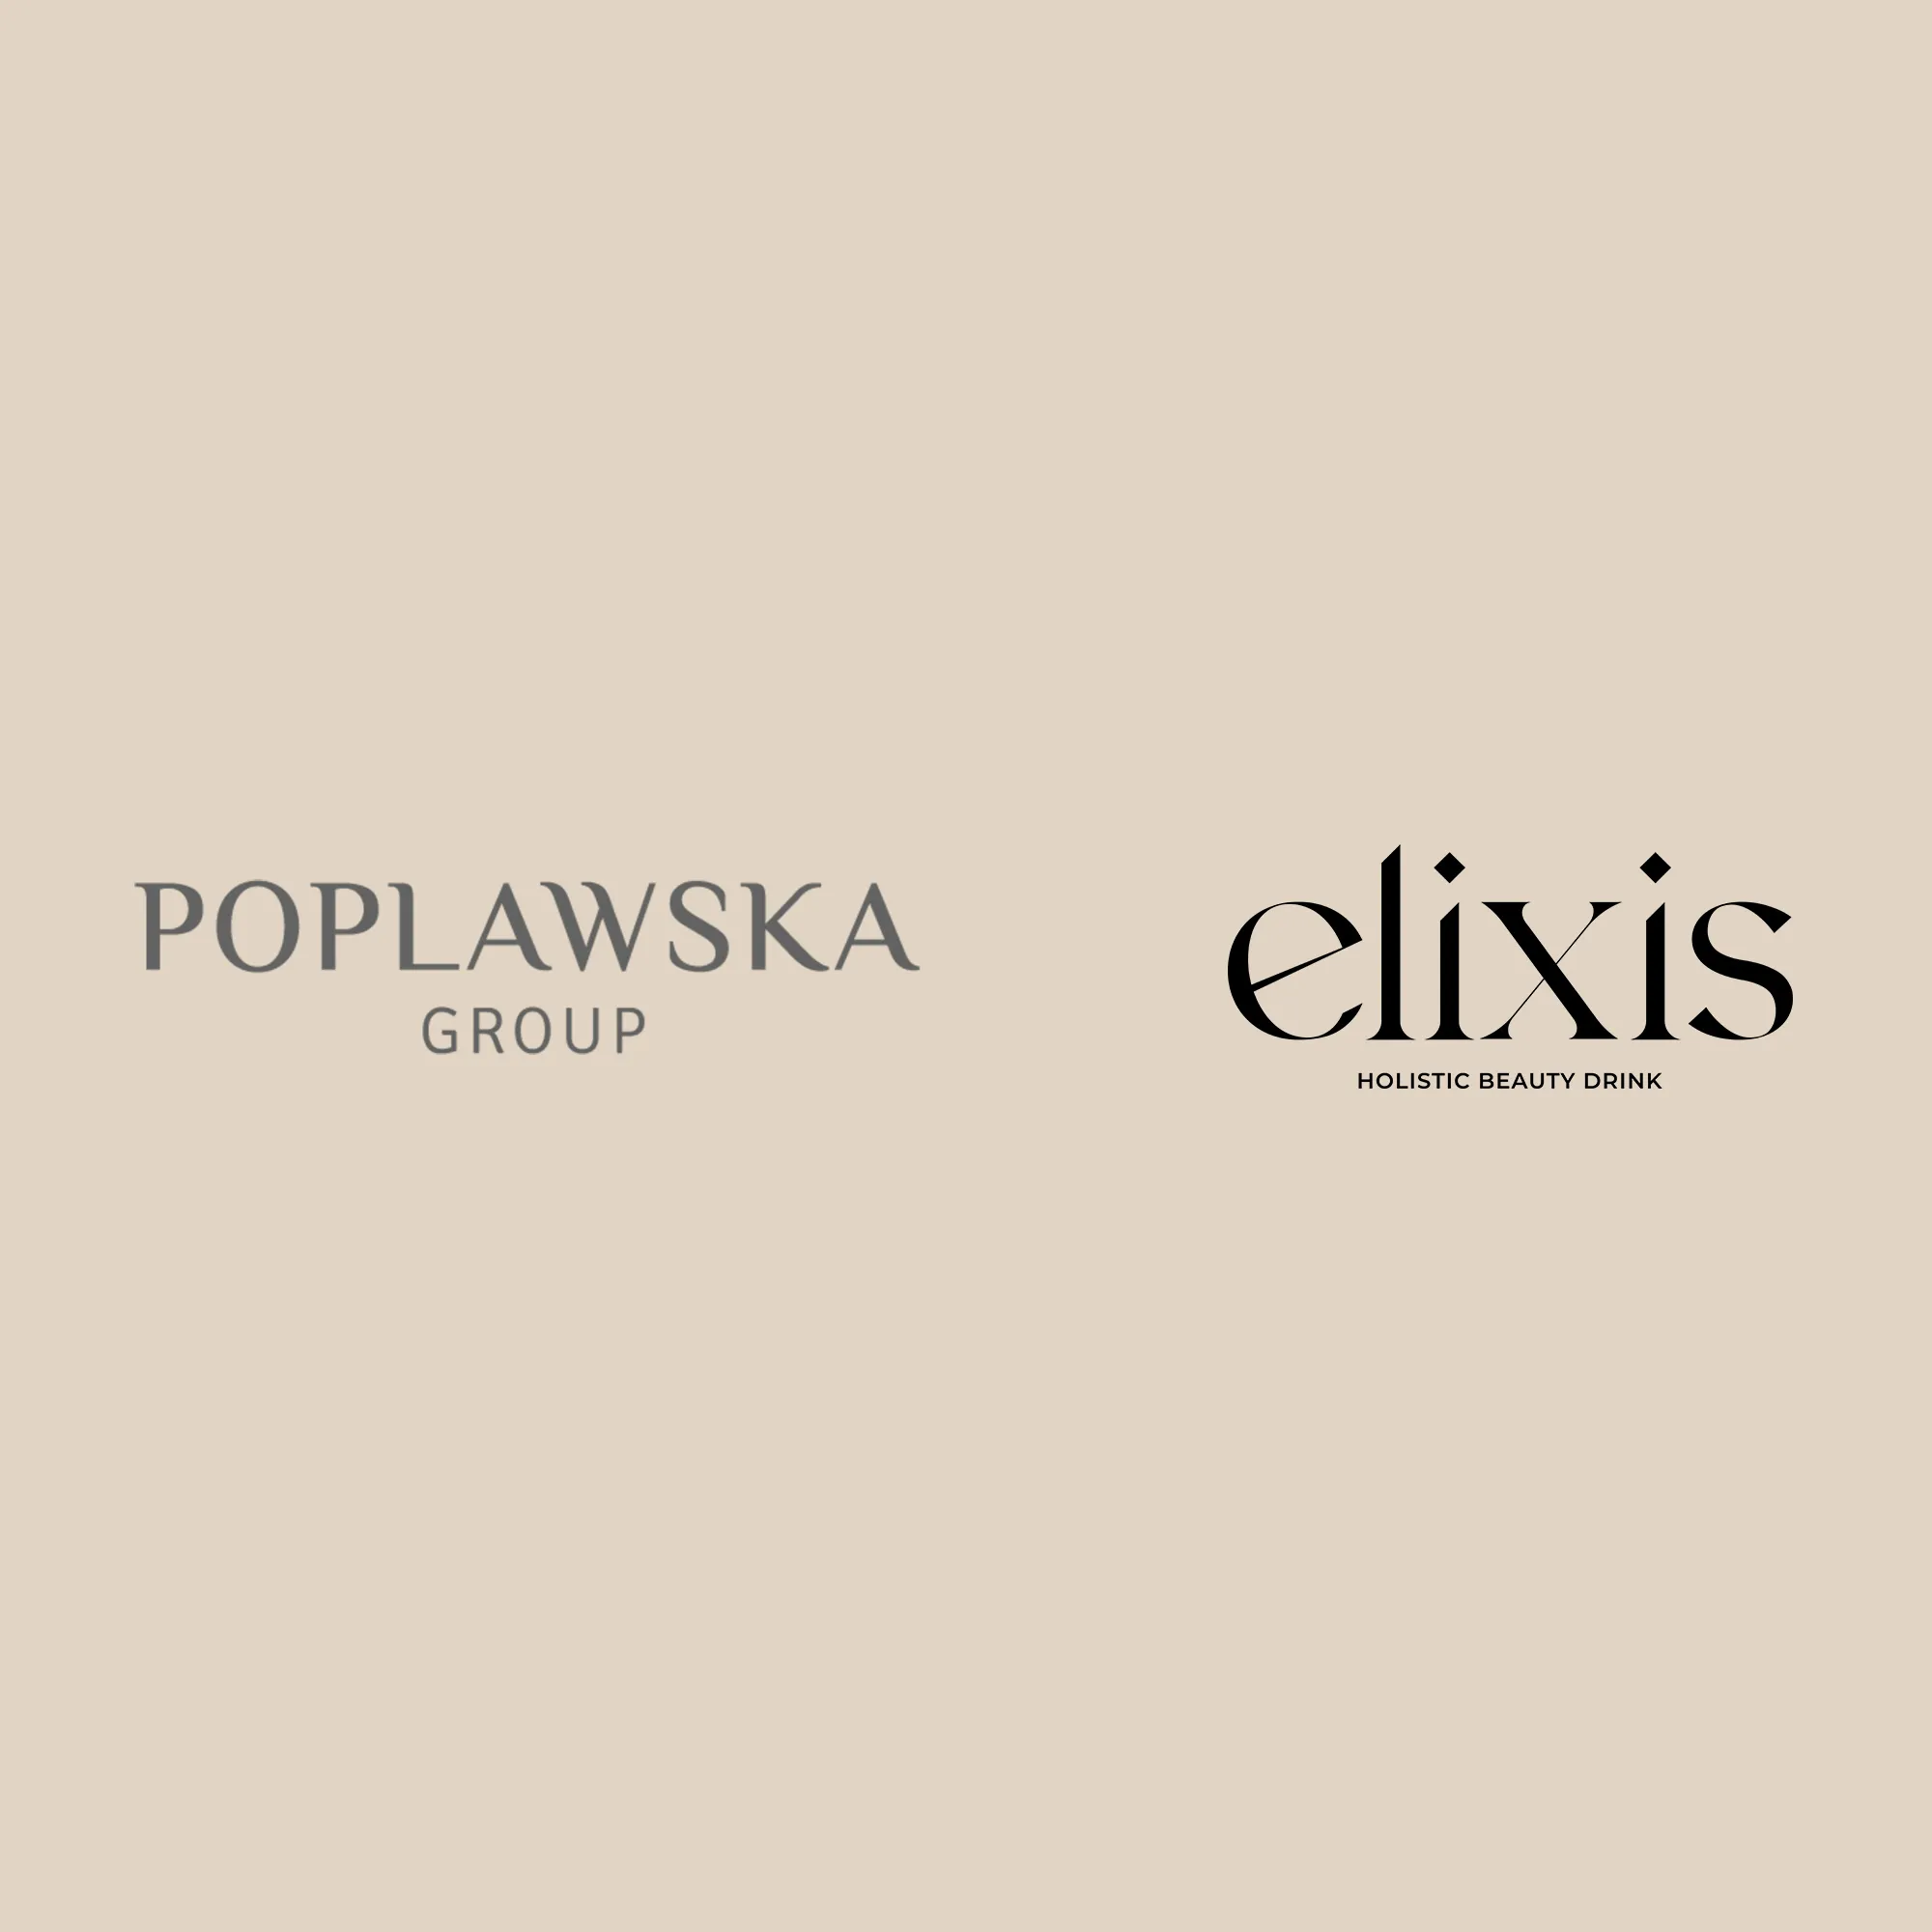 Popławska Group – Technology Partner of PUX